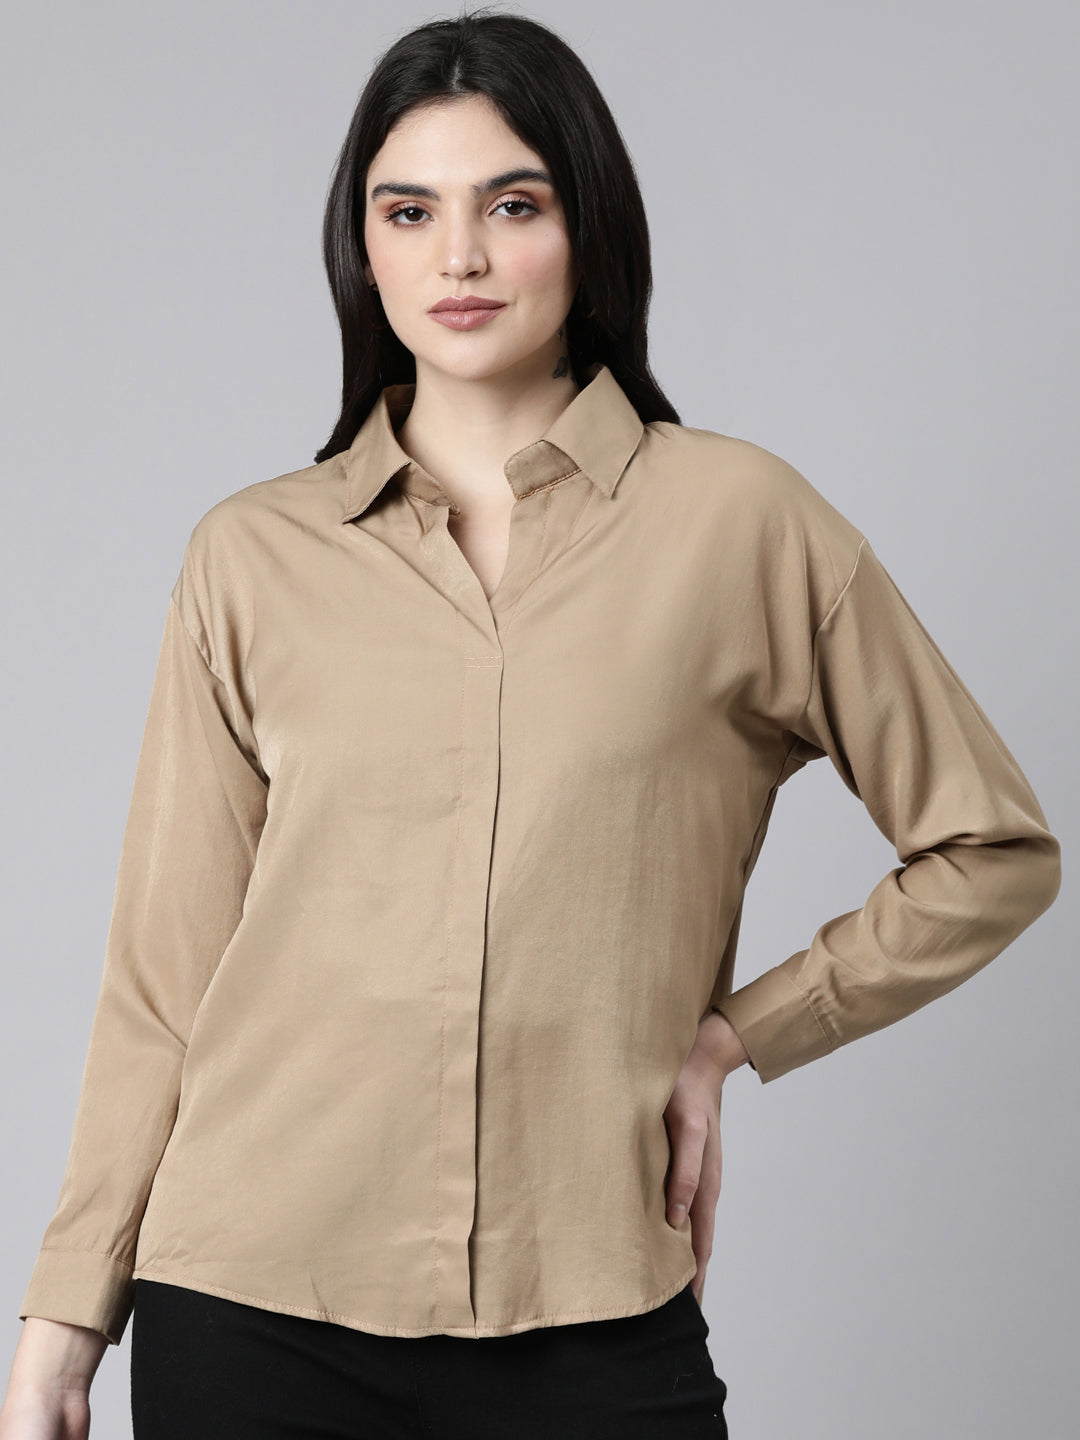 Women Solid Khaki Shirt Style Top